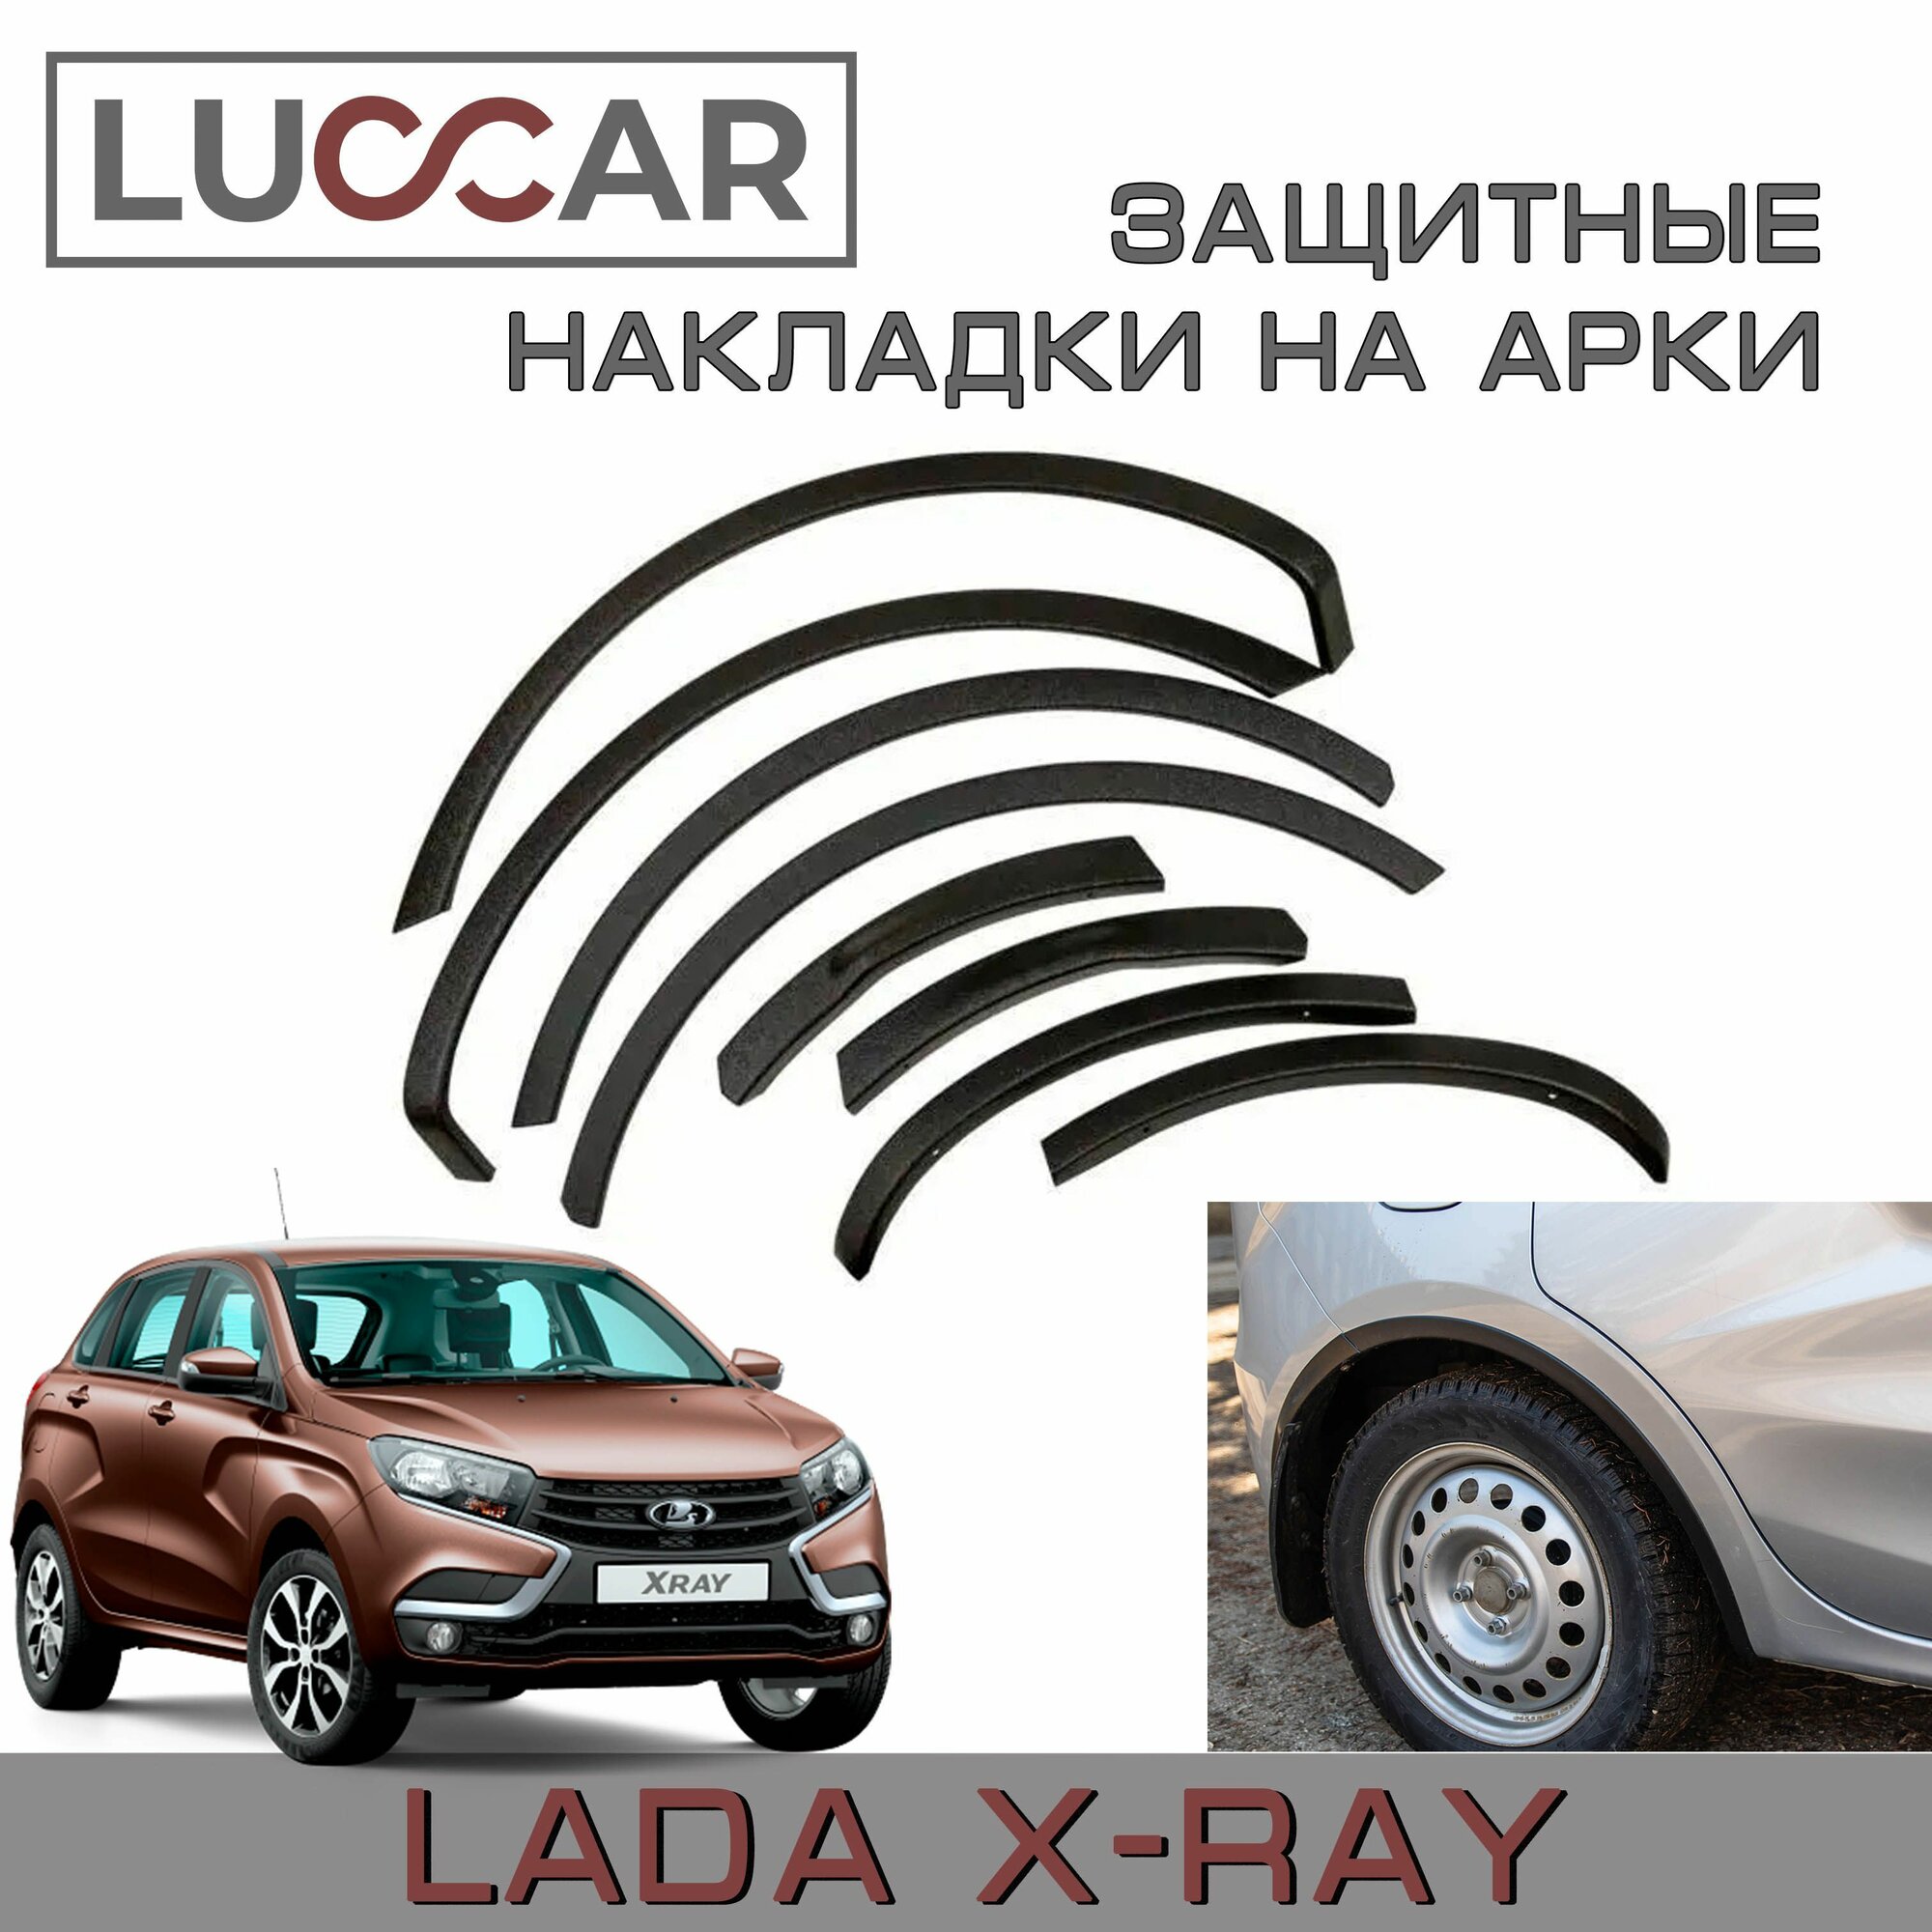 Защитные накладки ABS на арки Lada Xray - Накладки на кромки арок Лада Иксрей